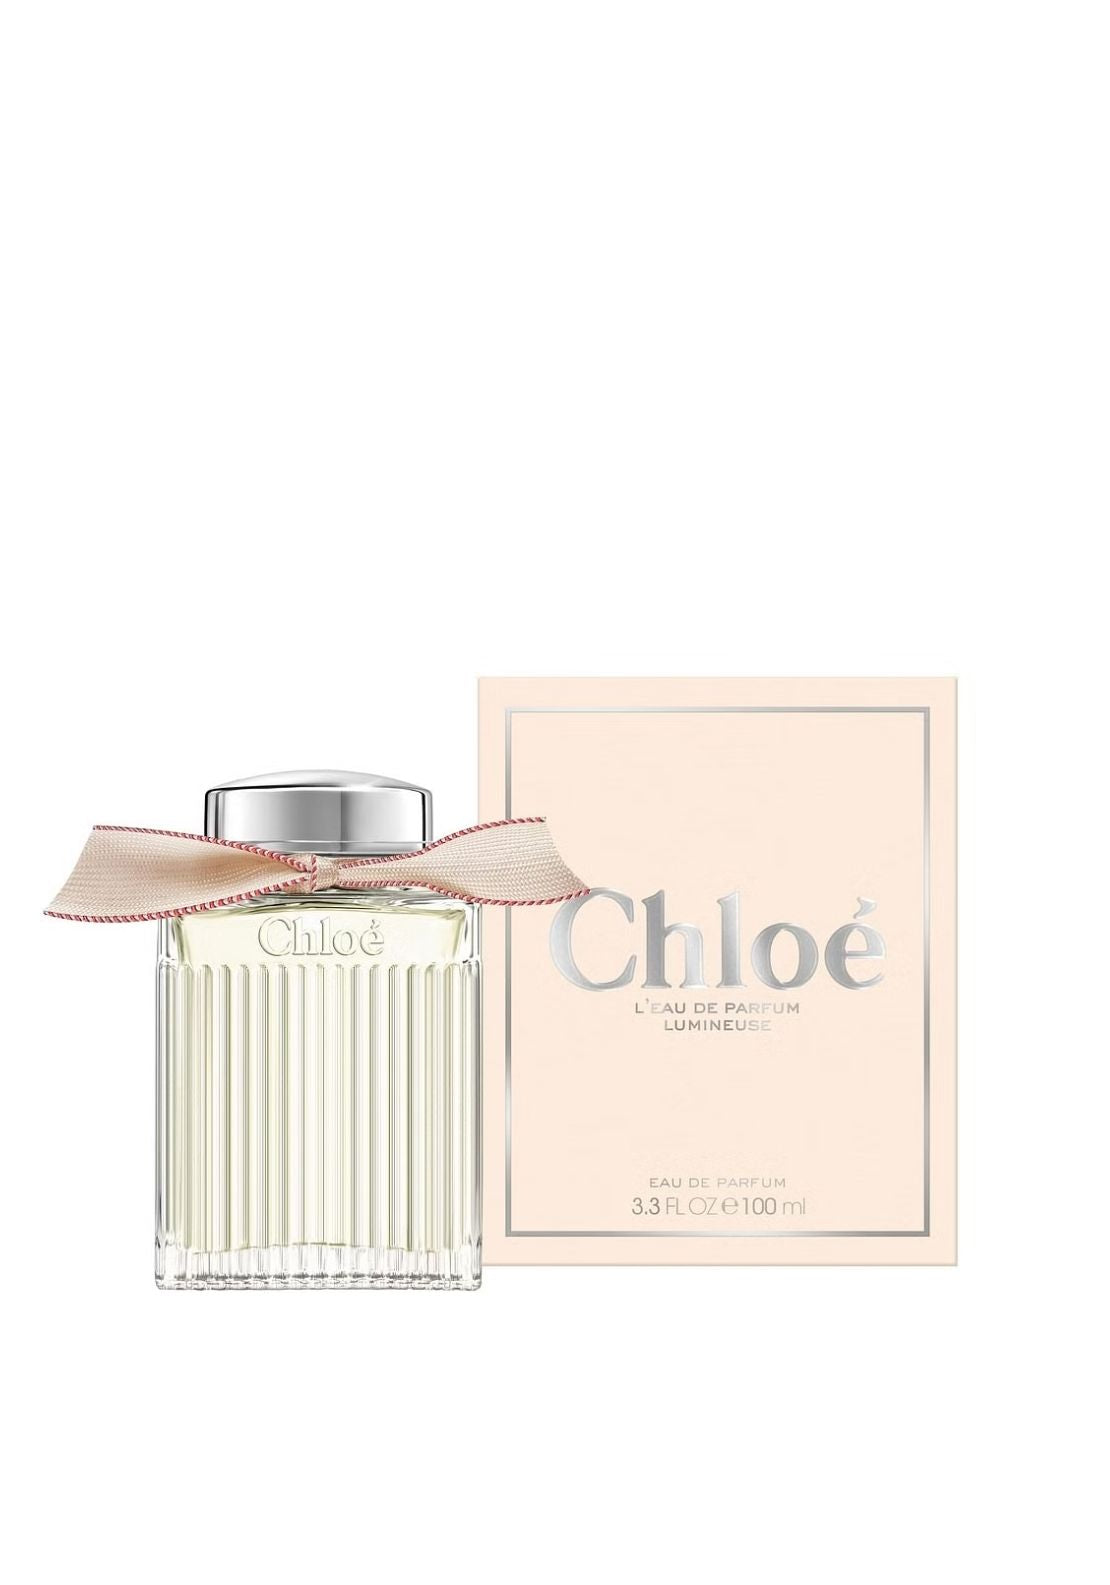 Chloe Chloe Lumineuse Eau de Parfum 100ml 1 Shaws Department Stores